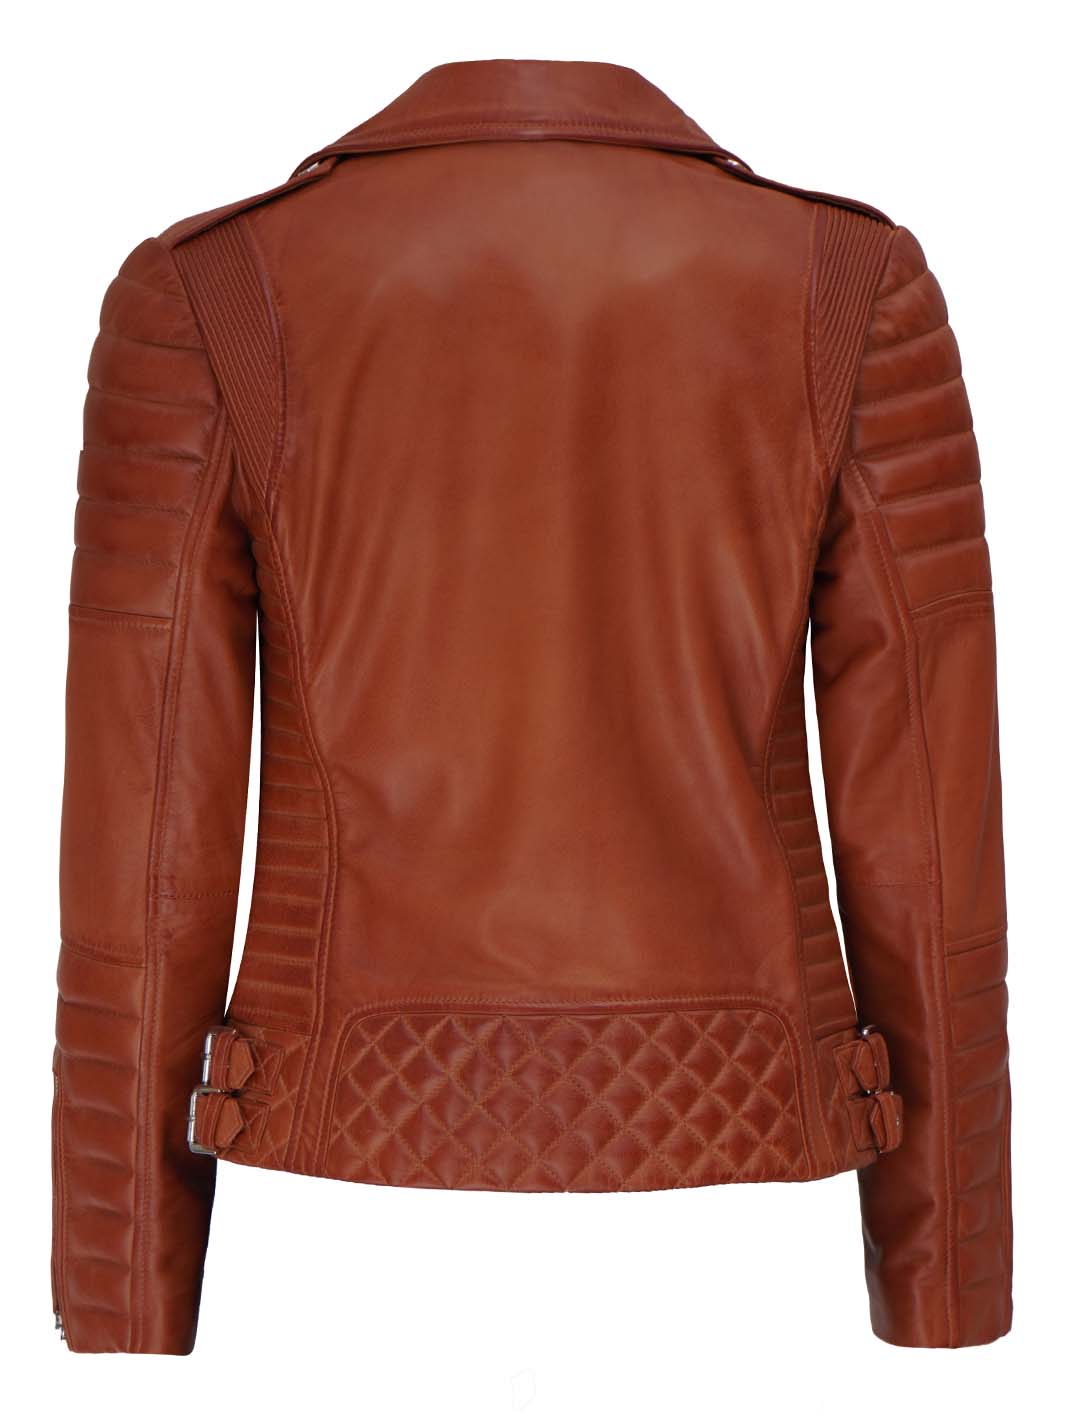 Lucillie Women's Tan Asymmetrical Cafe Racer Leather Jacket